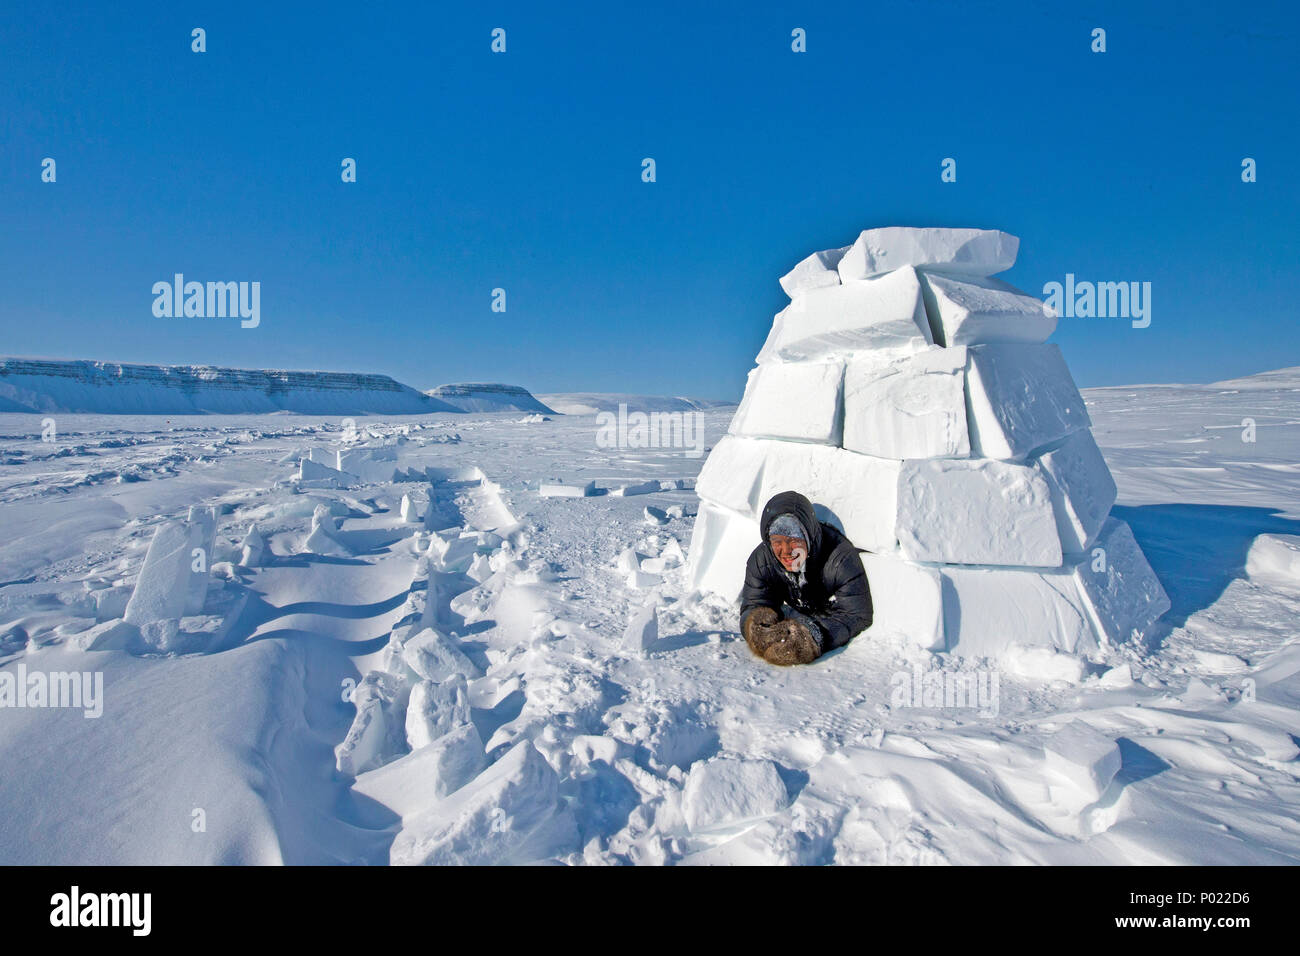 Inuit schaut aus einem Iglu, Territorium Nunavut, Kanada | Inuit schaut aus einem Iglu teritorry, Nunavut, Kanada Stockfoto